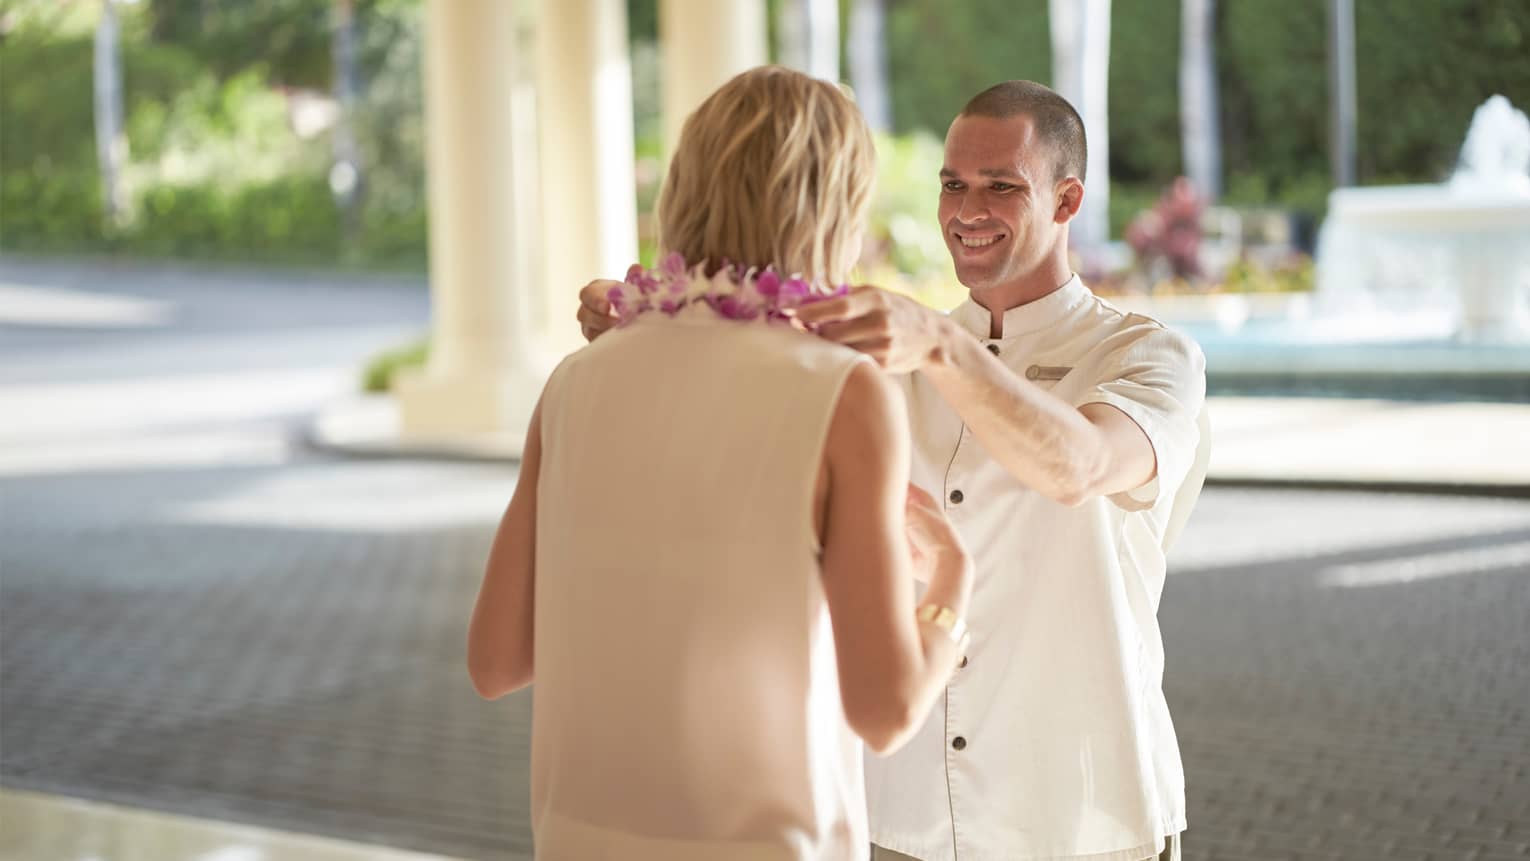 Man in white hotel uniform puts purple Hawaiian lei garland around woman's neck